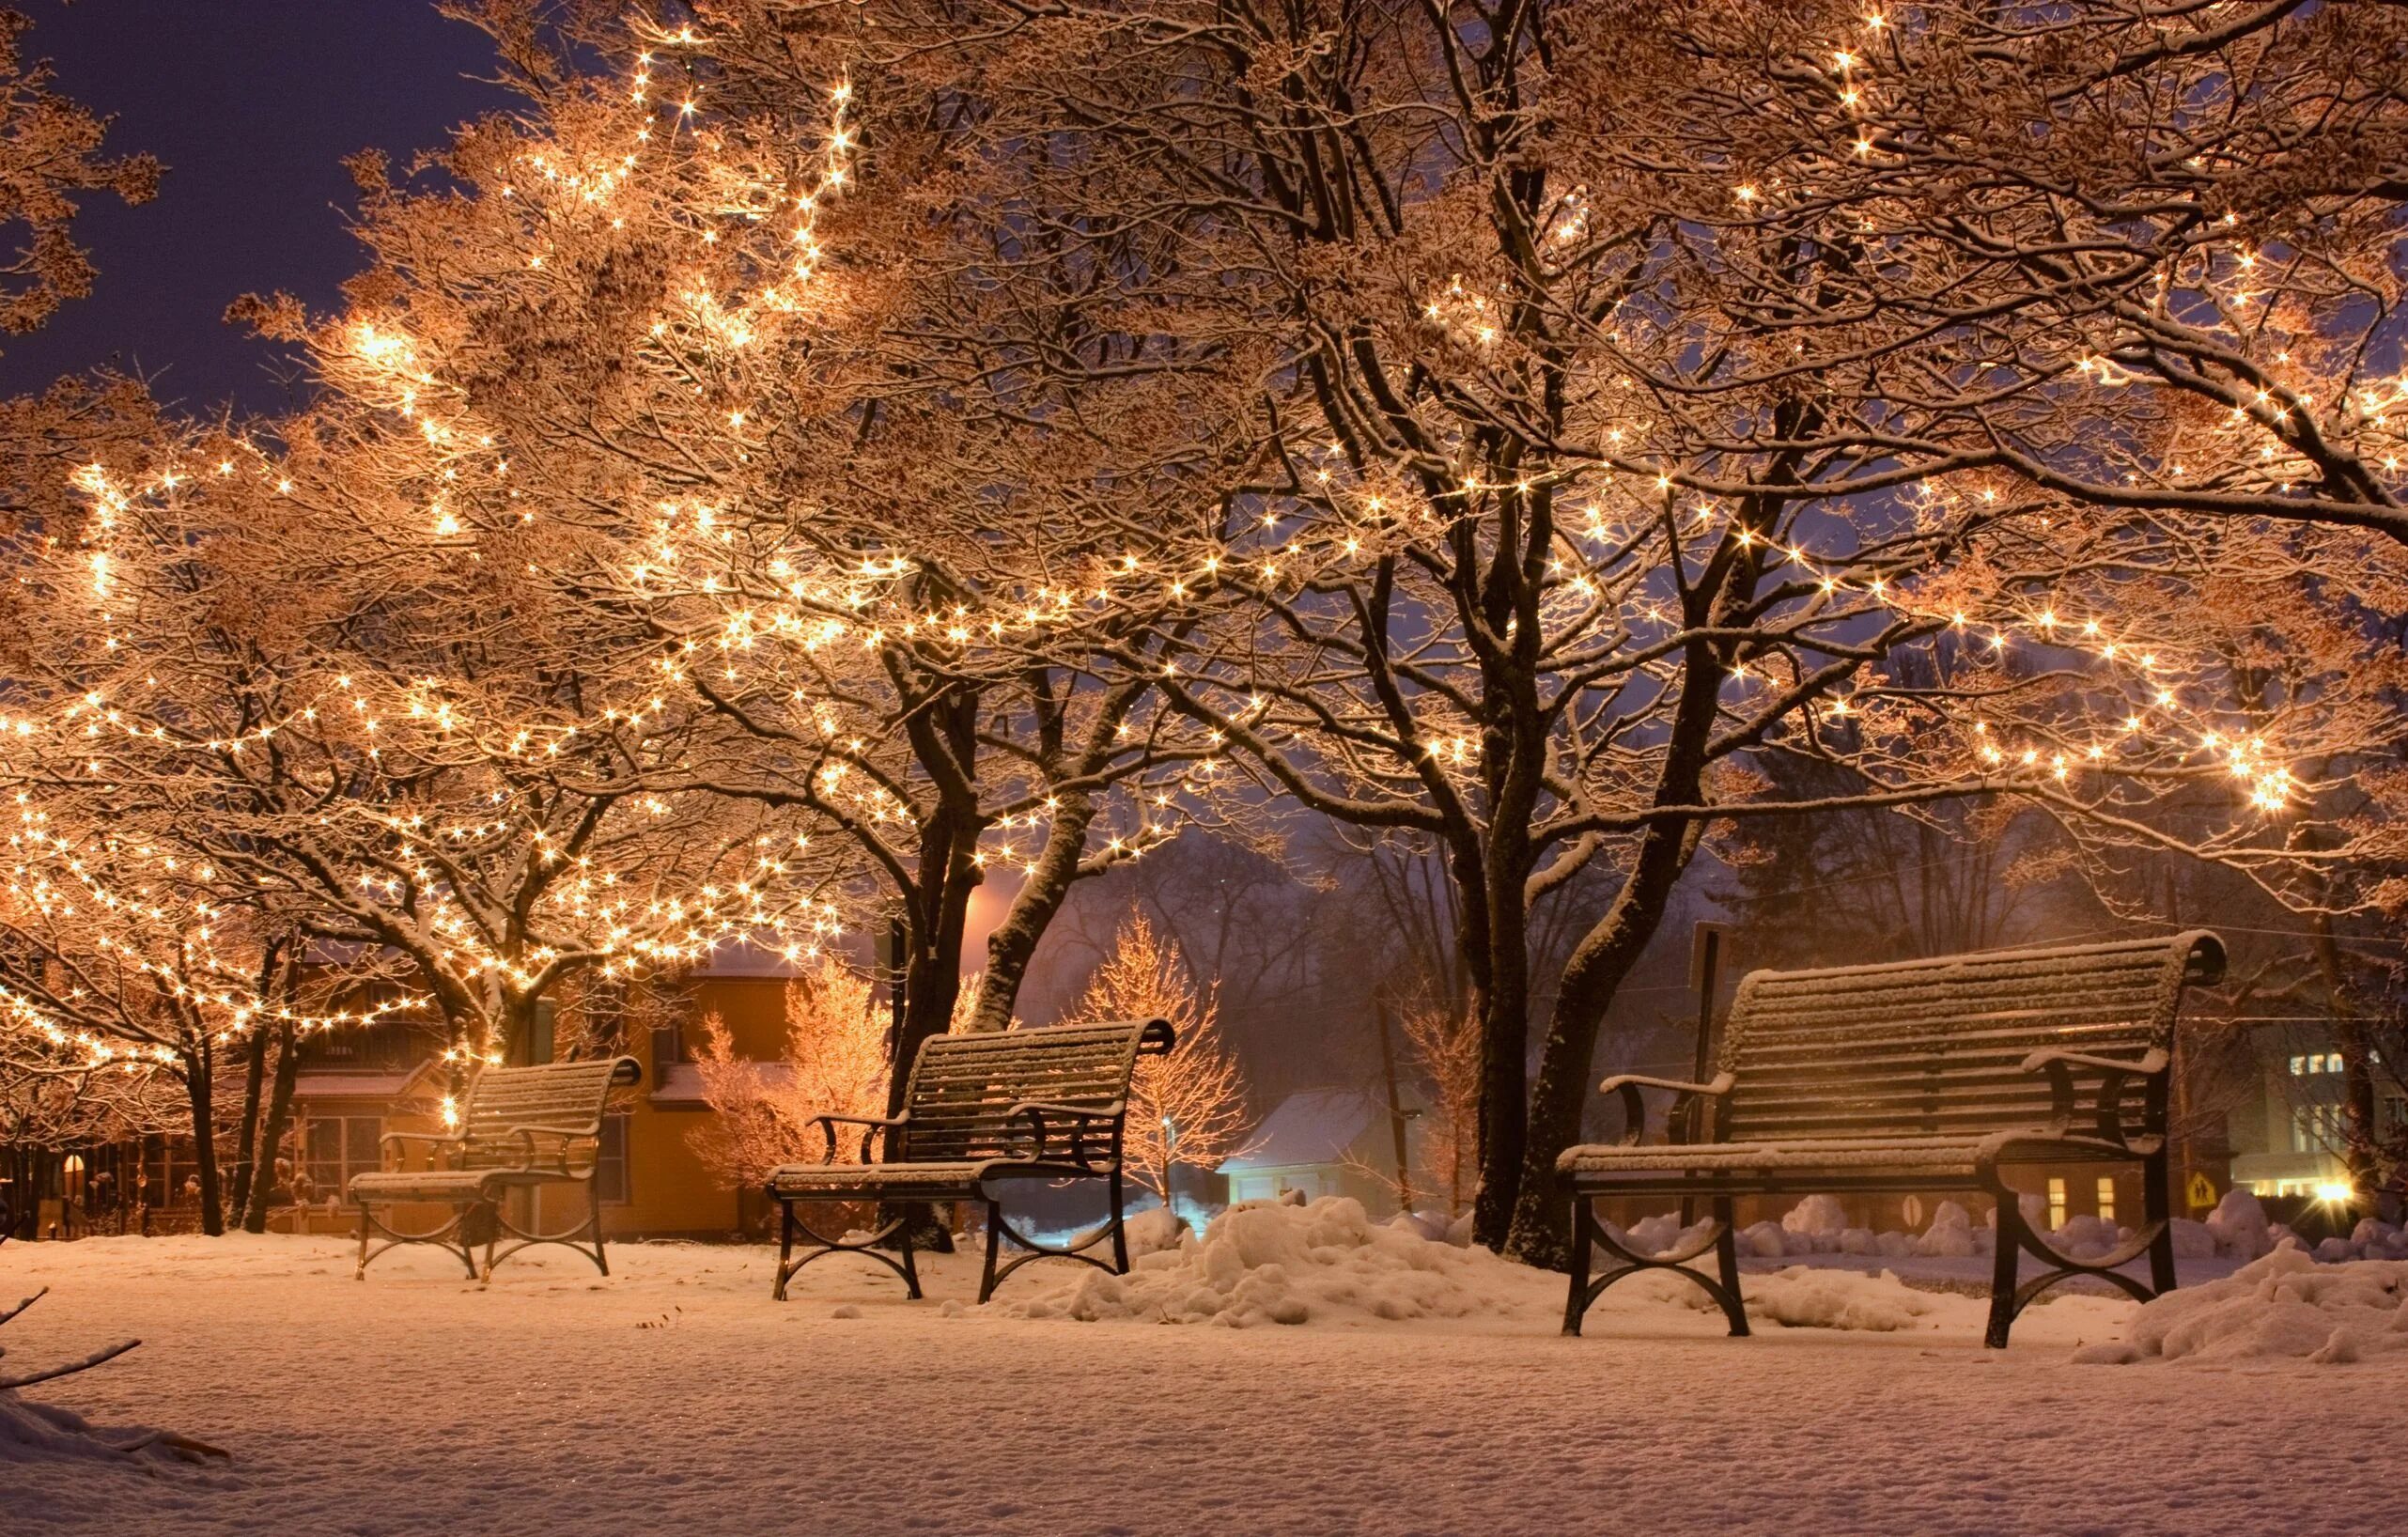 It is a beautiful evening. Зима в городе. Зимний парк. Зима. К вечеру. Зима ночь город.